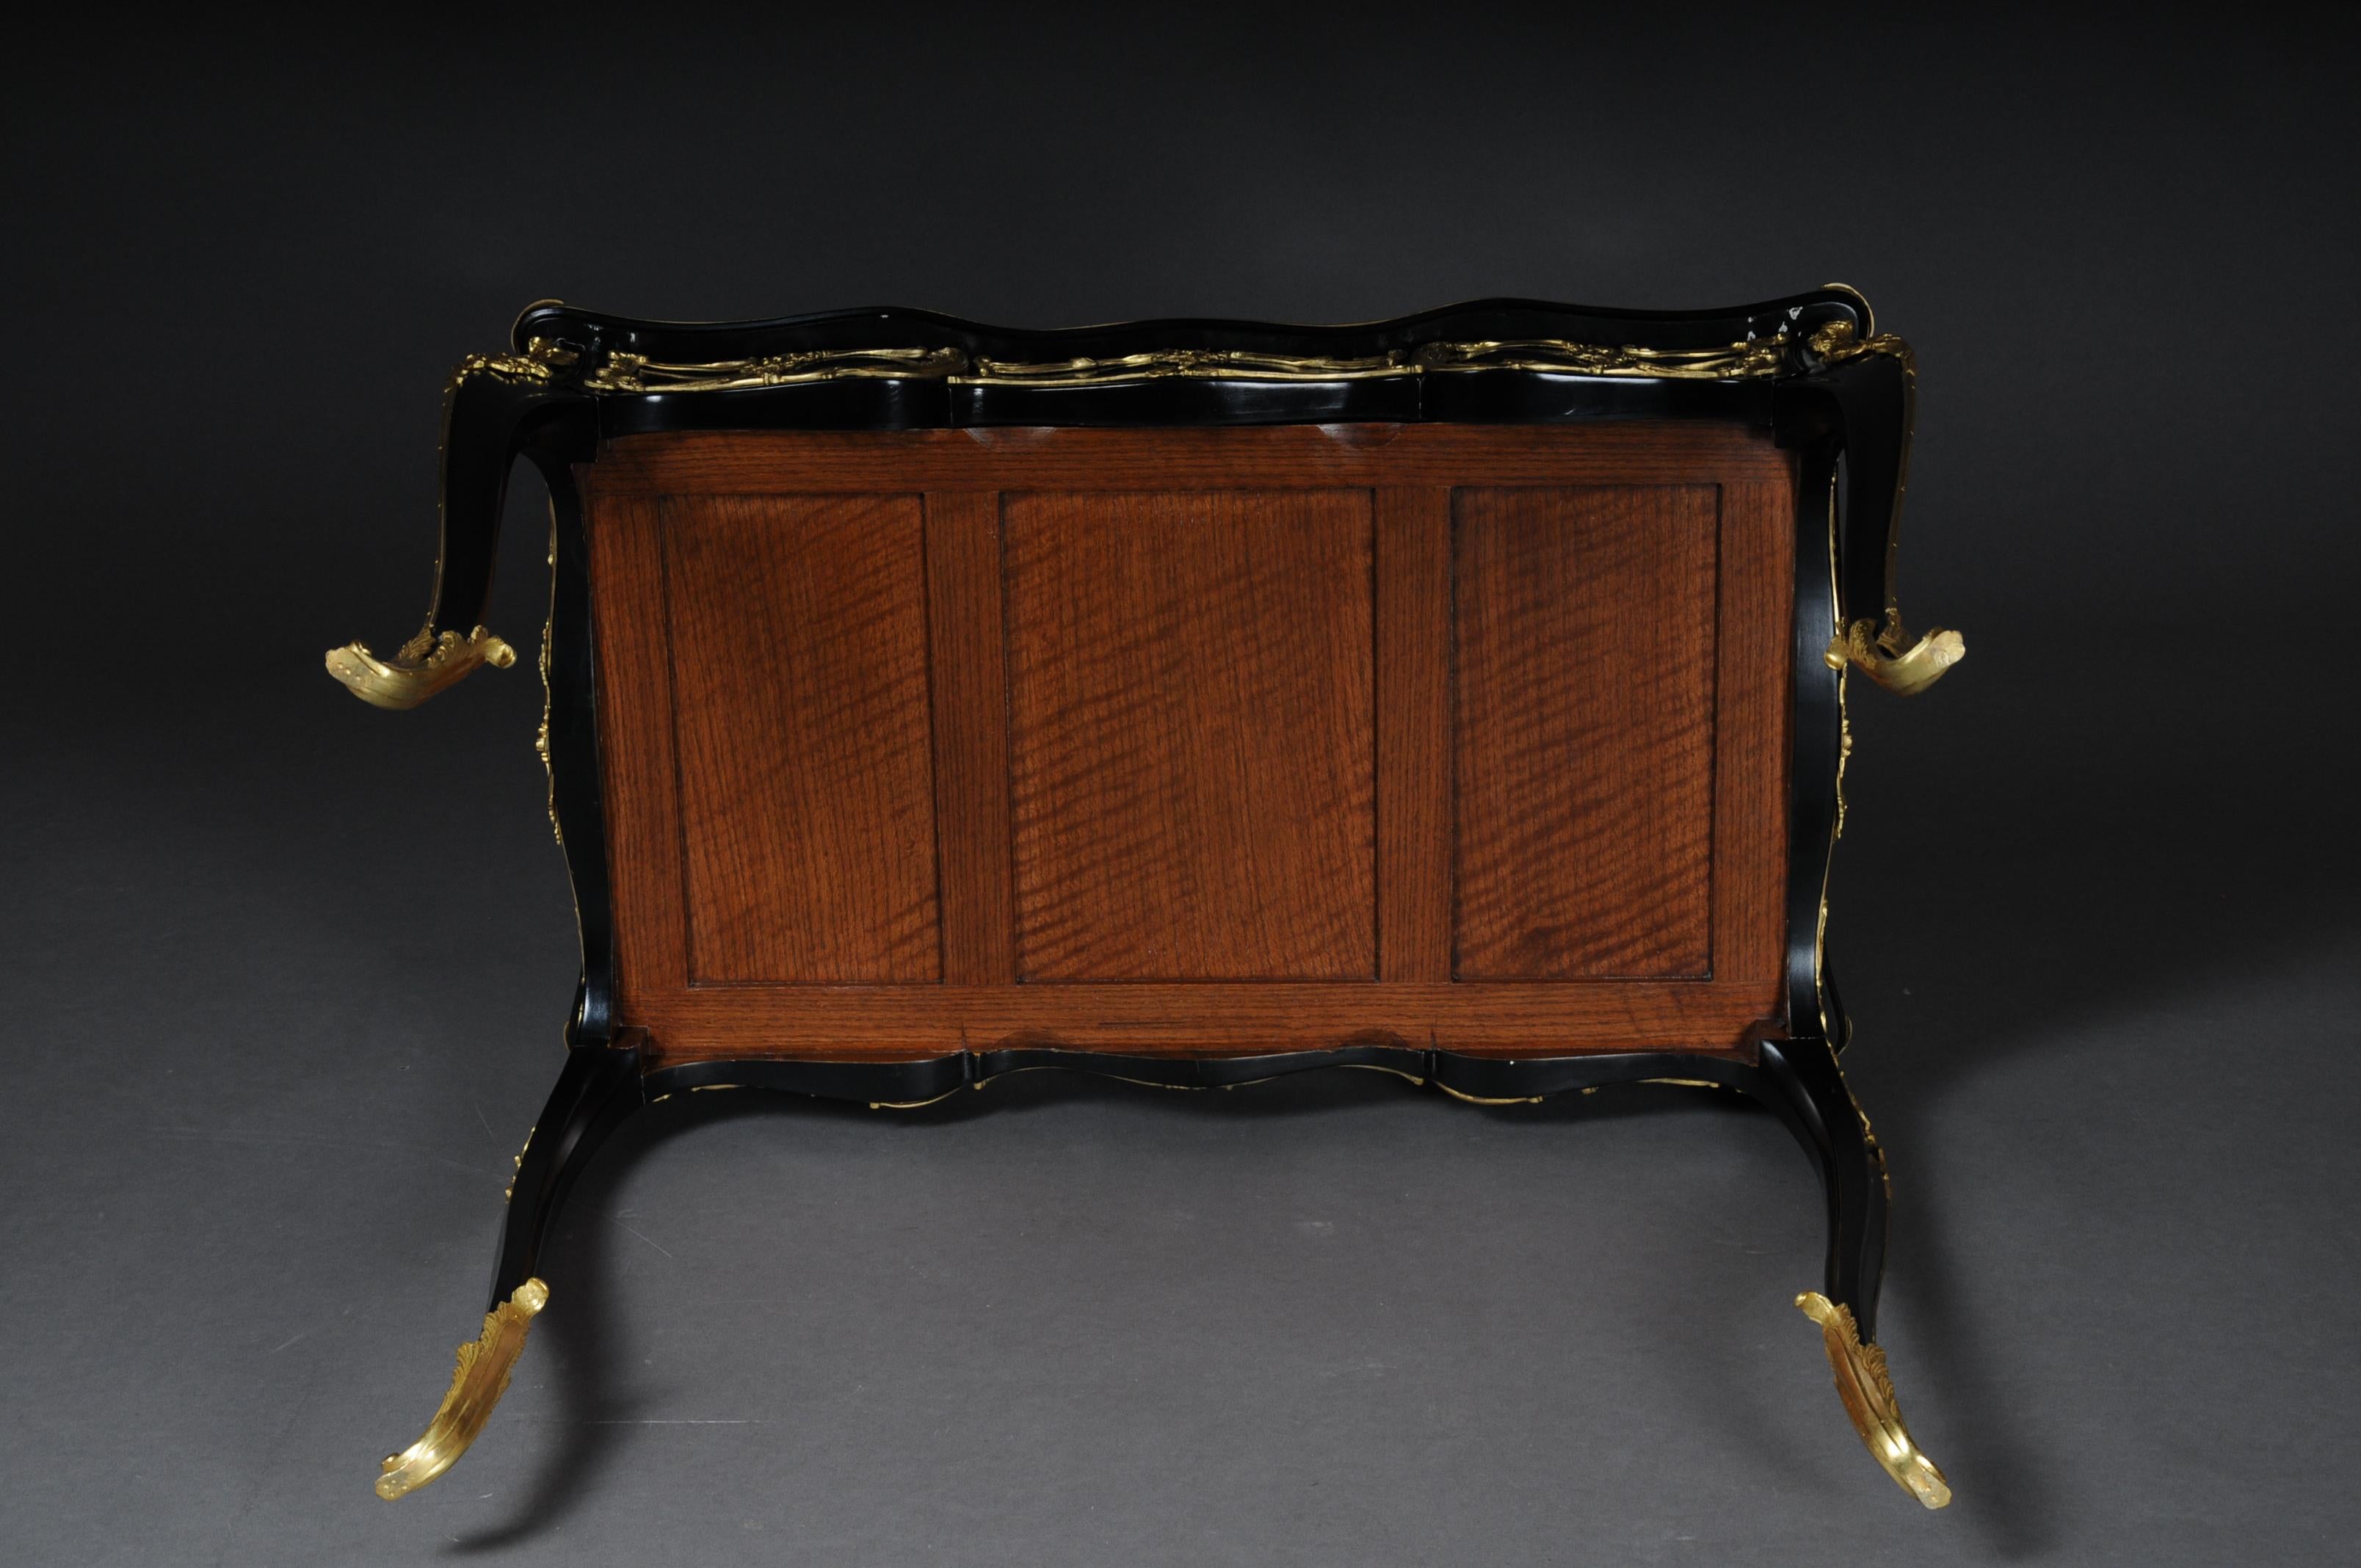 20th Century Elegant Black Bureau Plat / Writing Desk in Louis XV, Beech For Sale 4